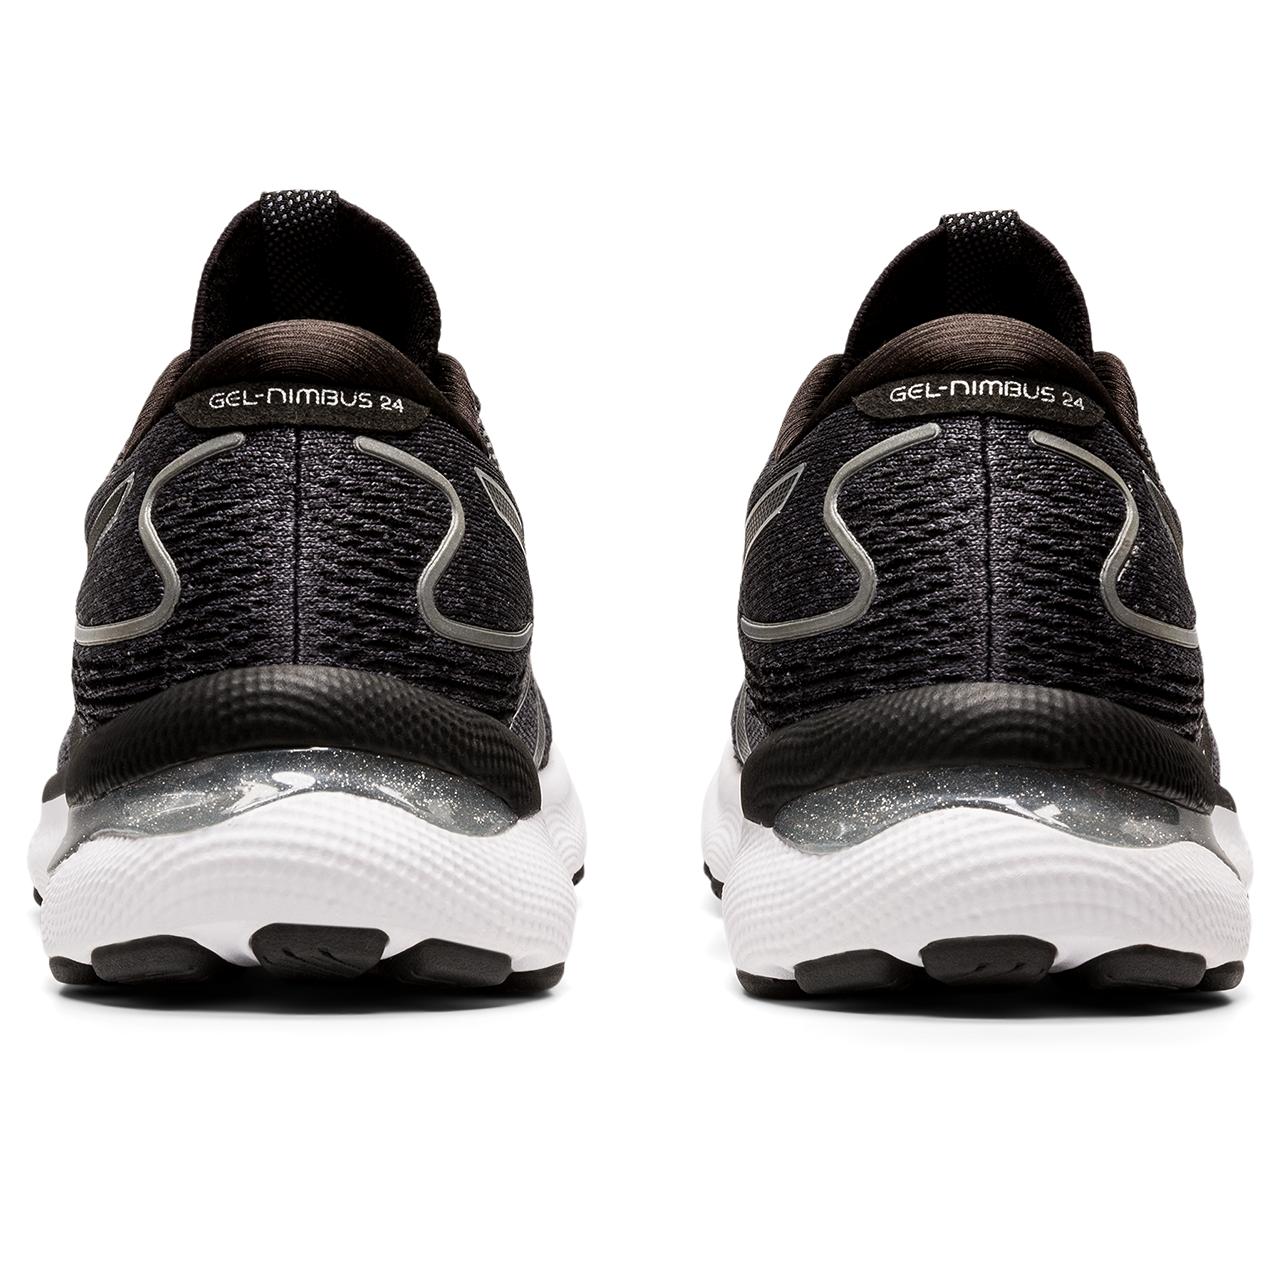 Nimbus 24 Women's Running Shoes Black 1012B201 - 001W - Asics Gel - asics  metaracer tokyo the cut